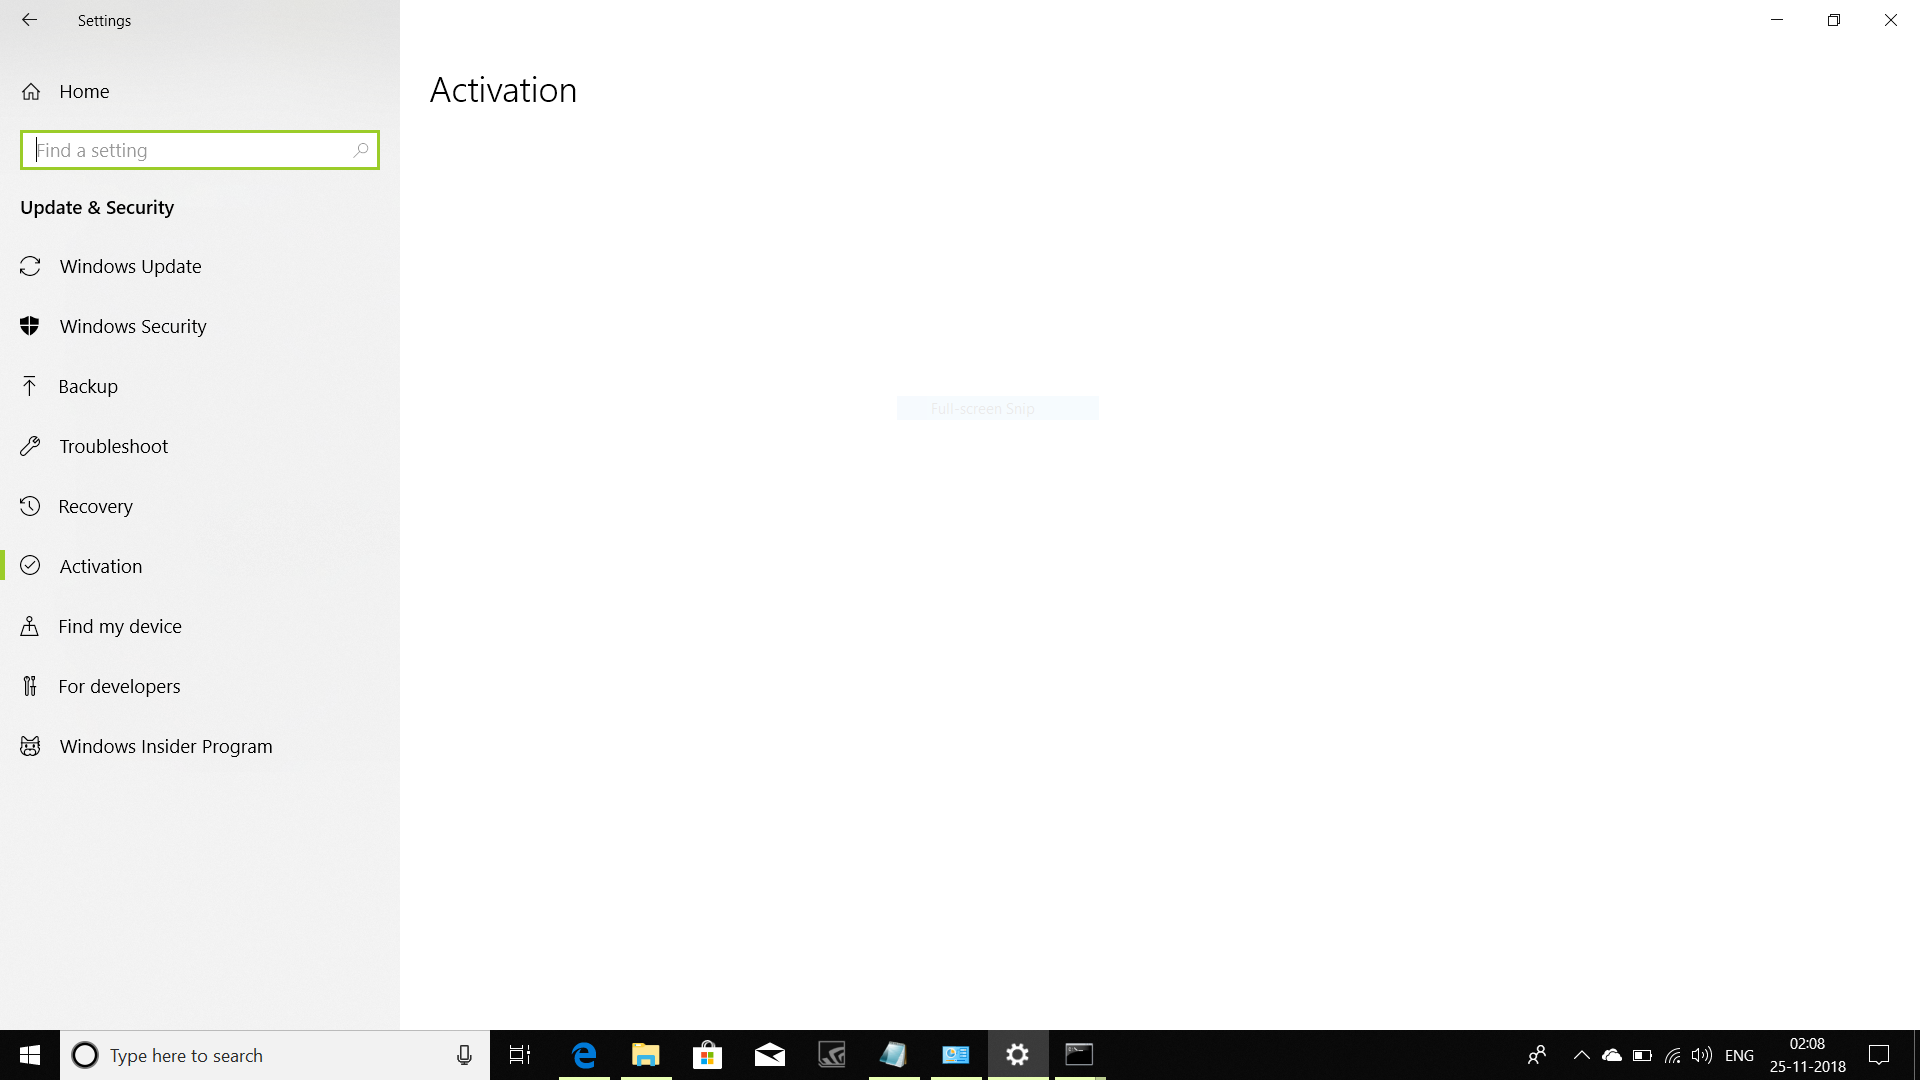 Windows activation issue cff0da83-8c39-4a84-a911-f4c9b99e3e62?upload=true.png